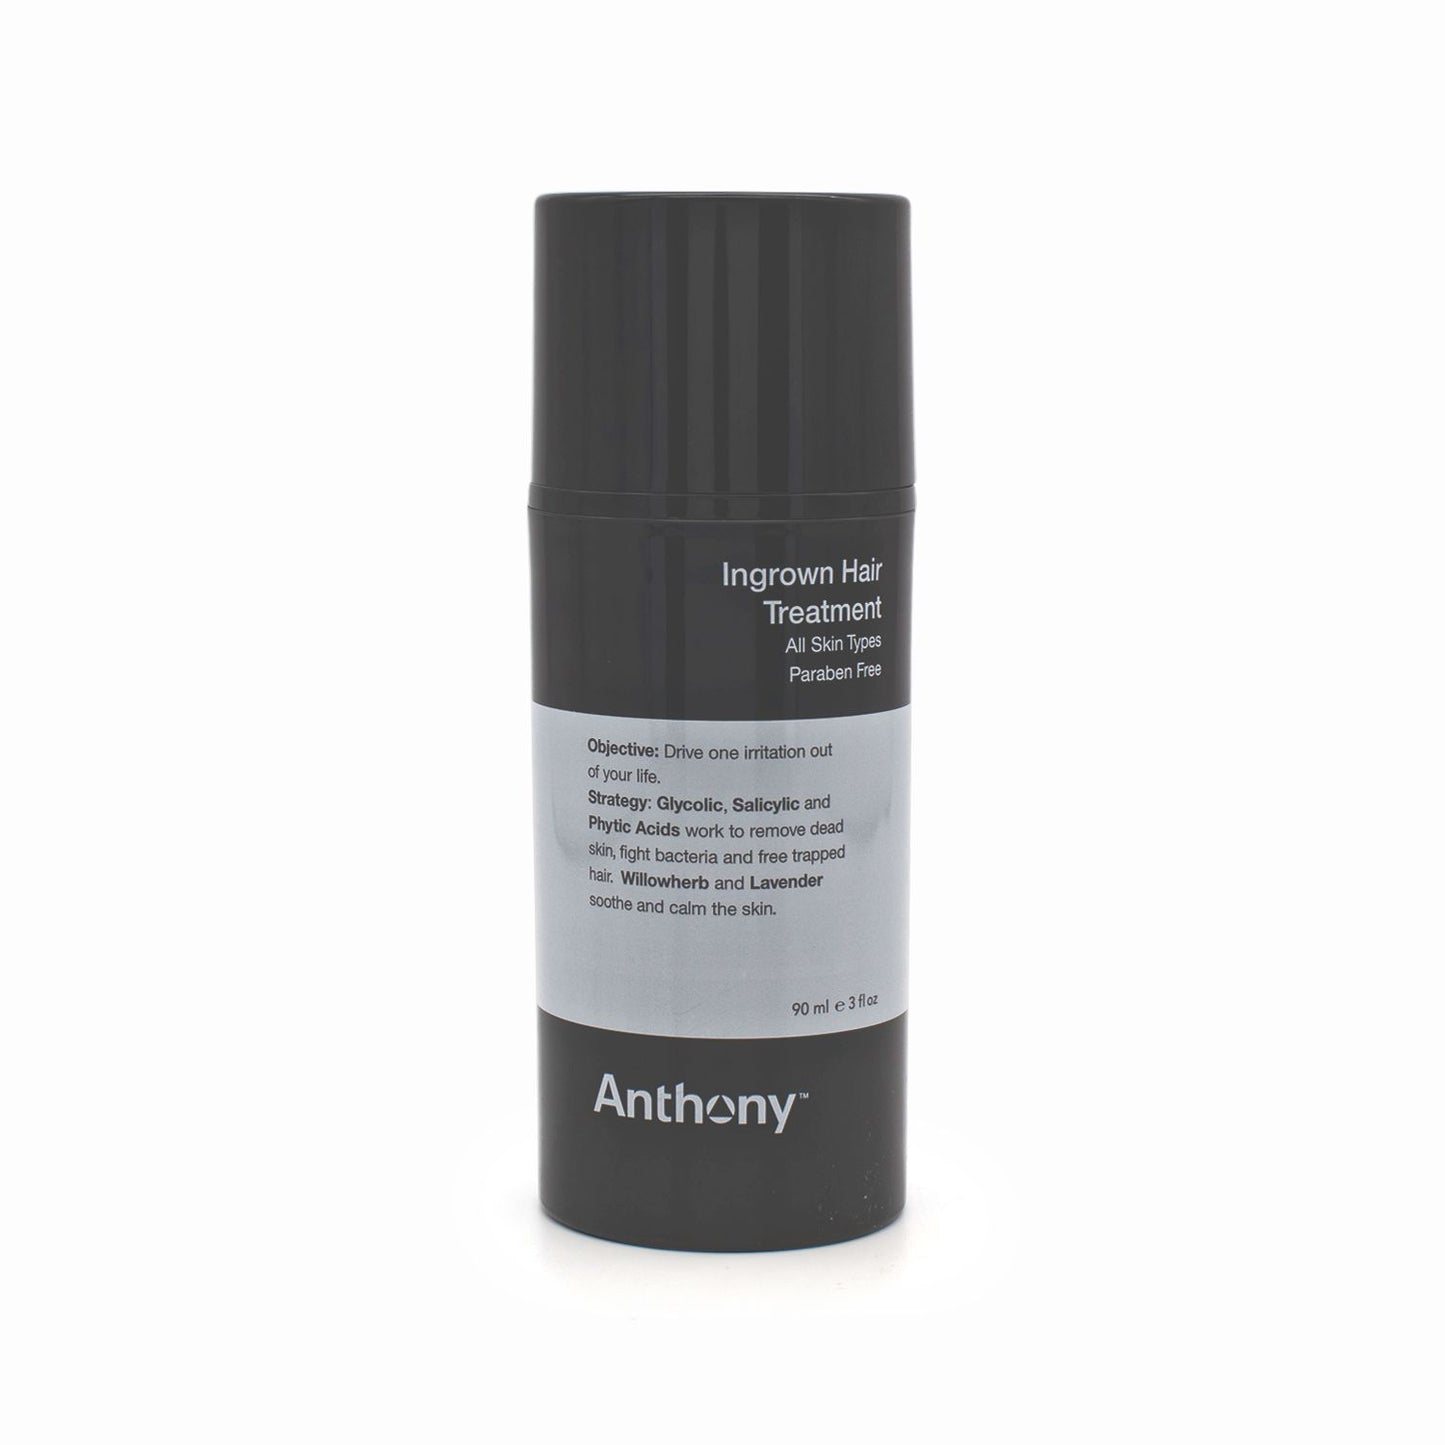 Anthony Ingrown Hair Treatment 90ml - Imperfect Box